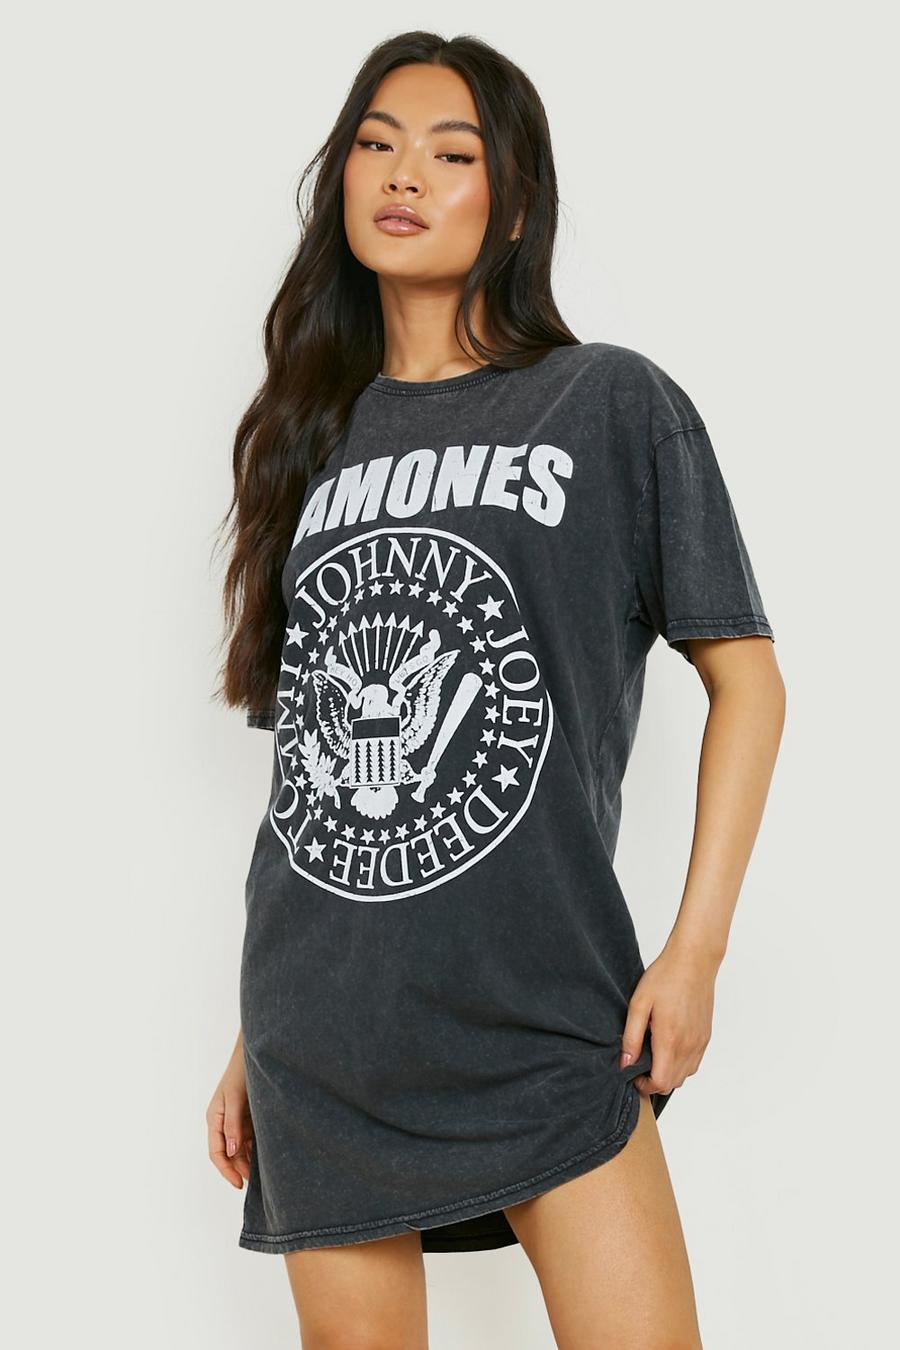 Charcoal grey Ramones Acid Wash Licensed T-shirt Dress 